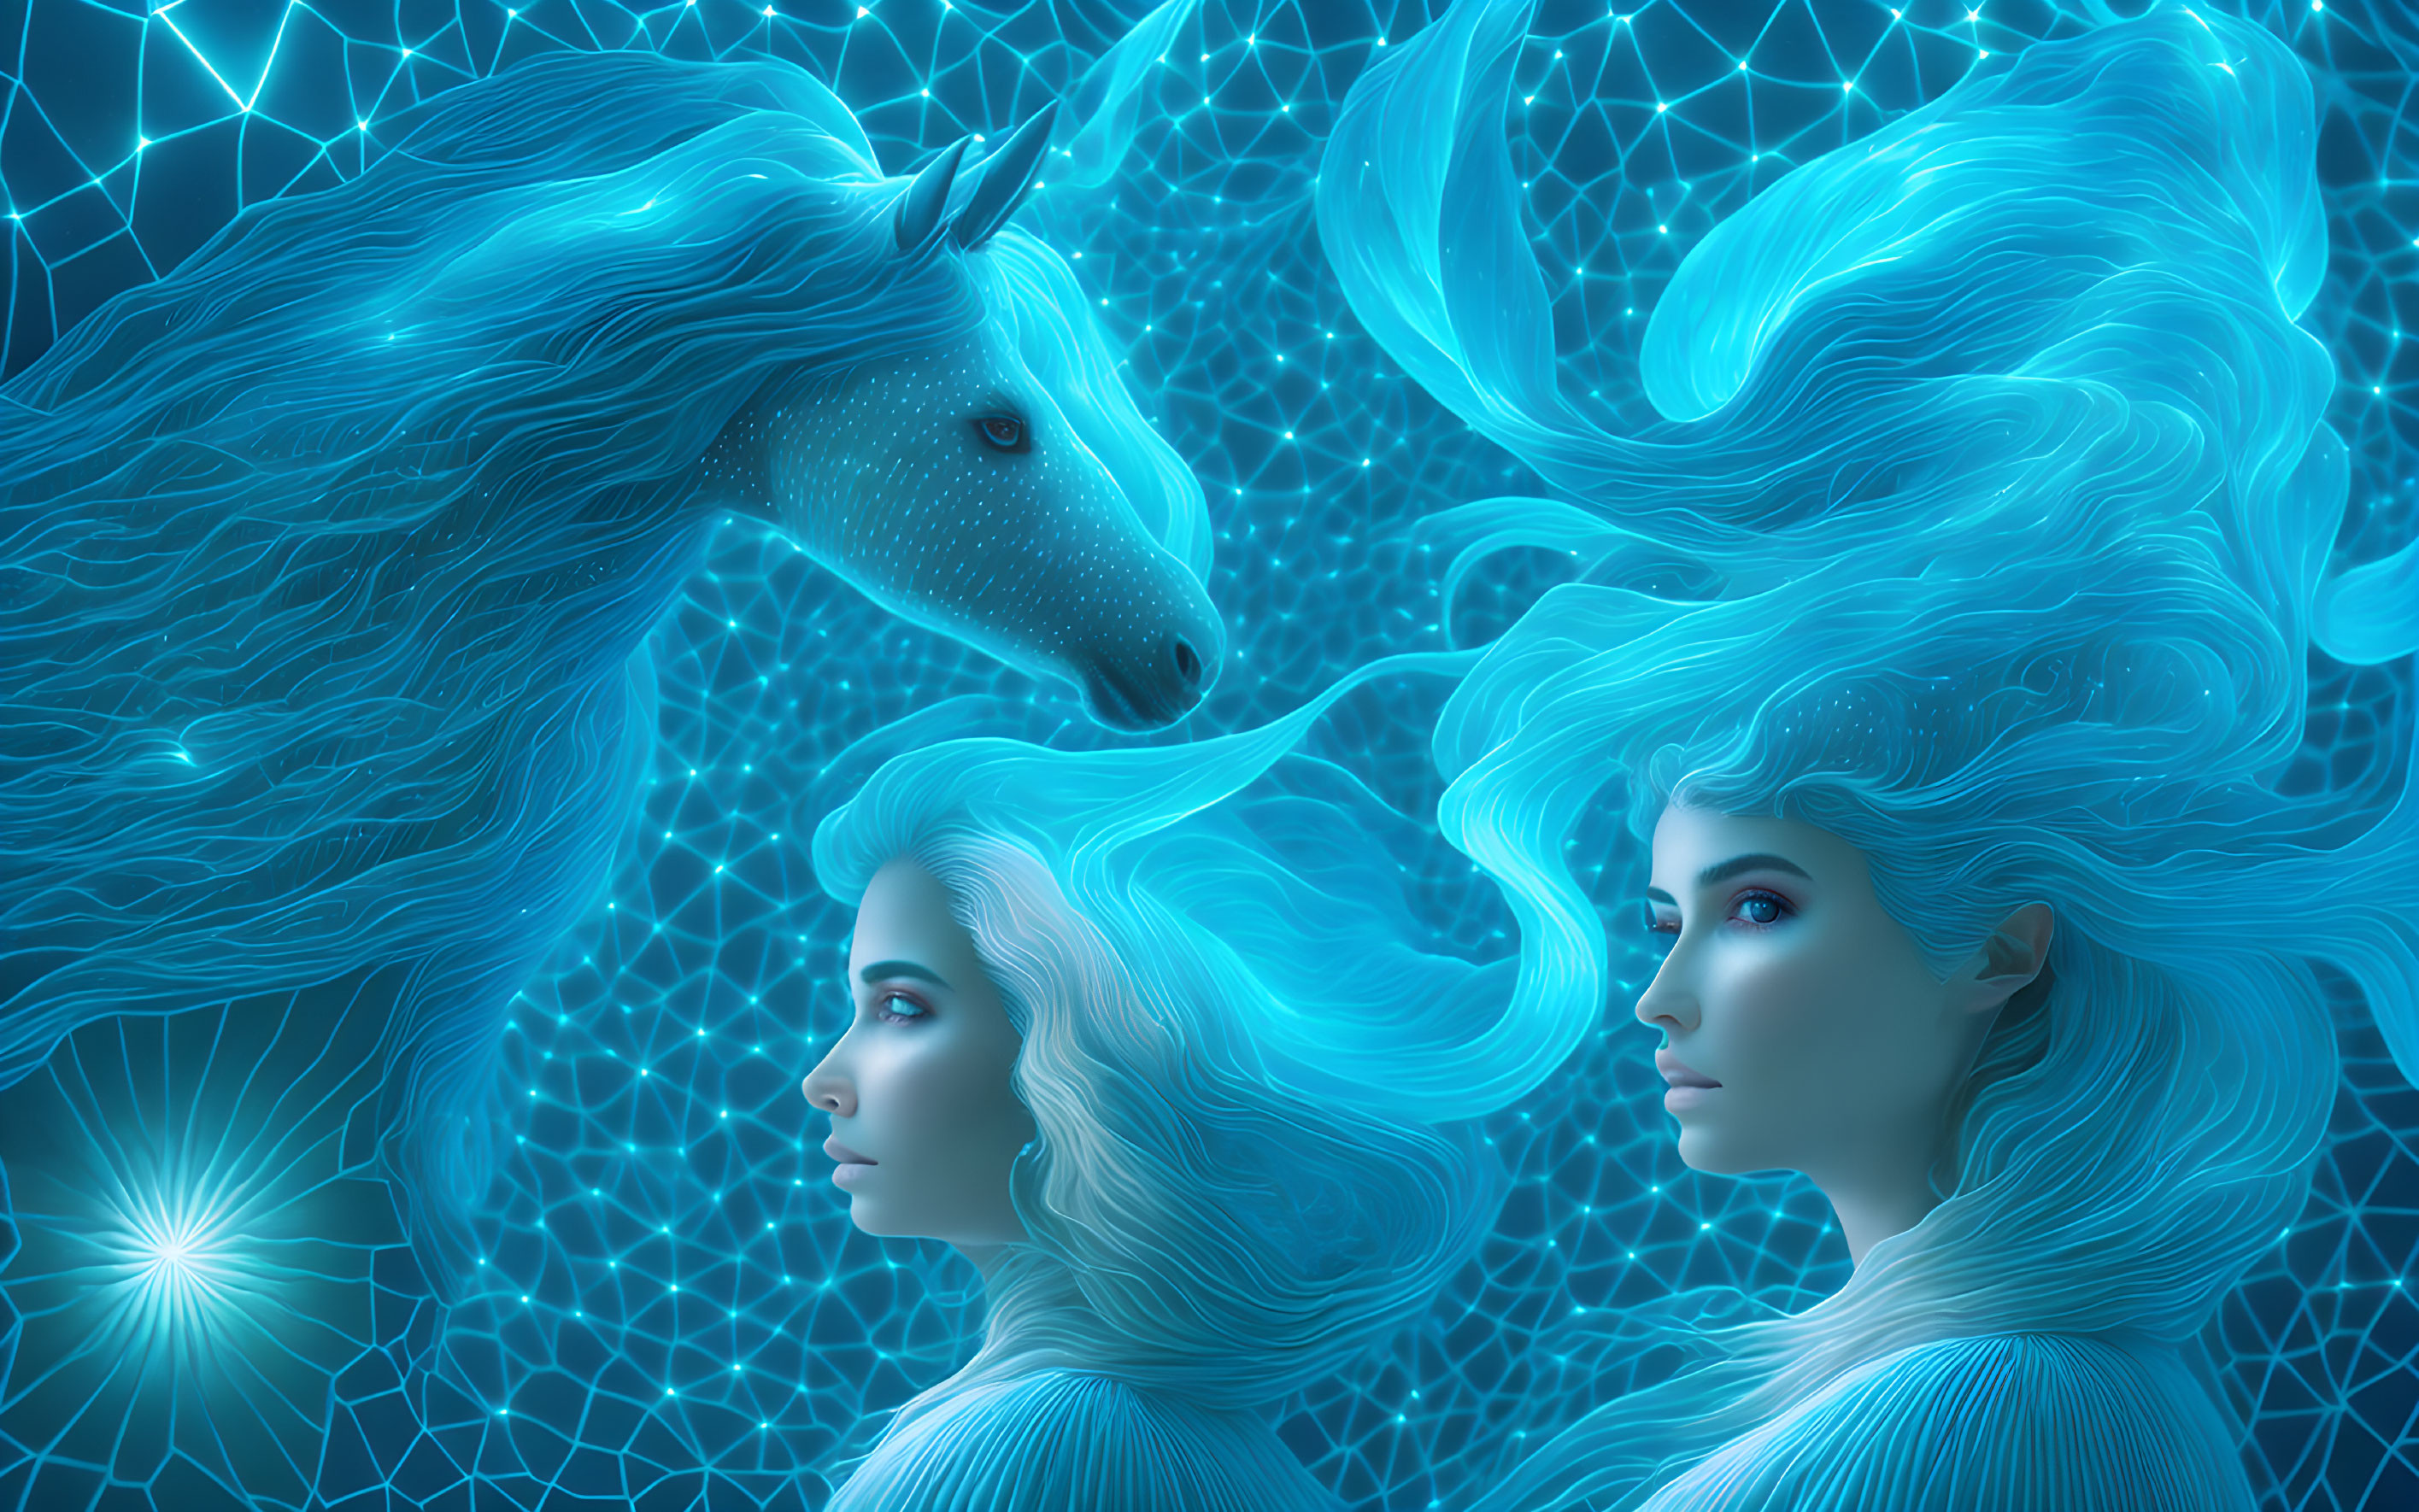 Enchanted Unicorn: Mystical Connection